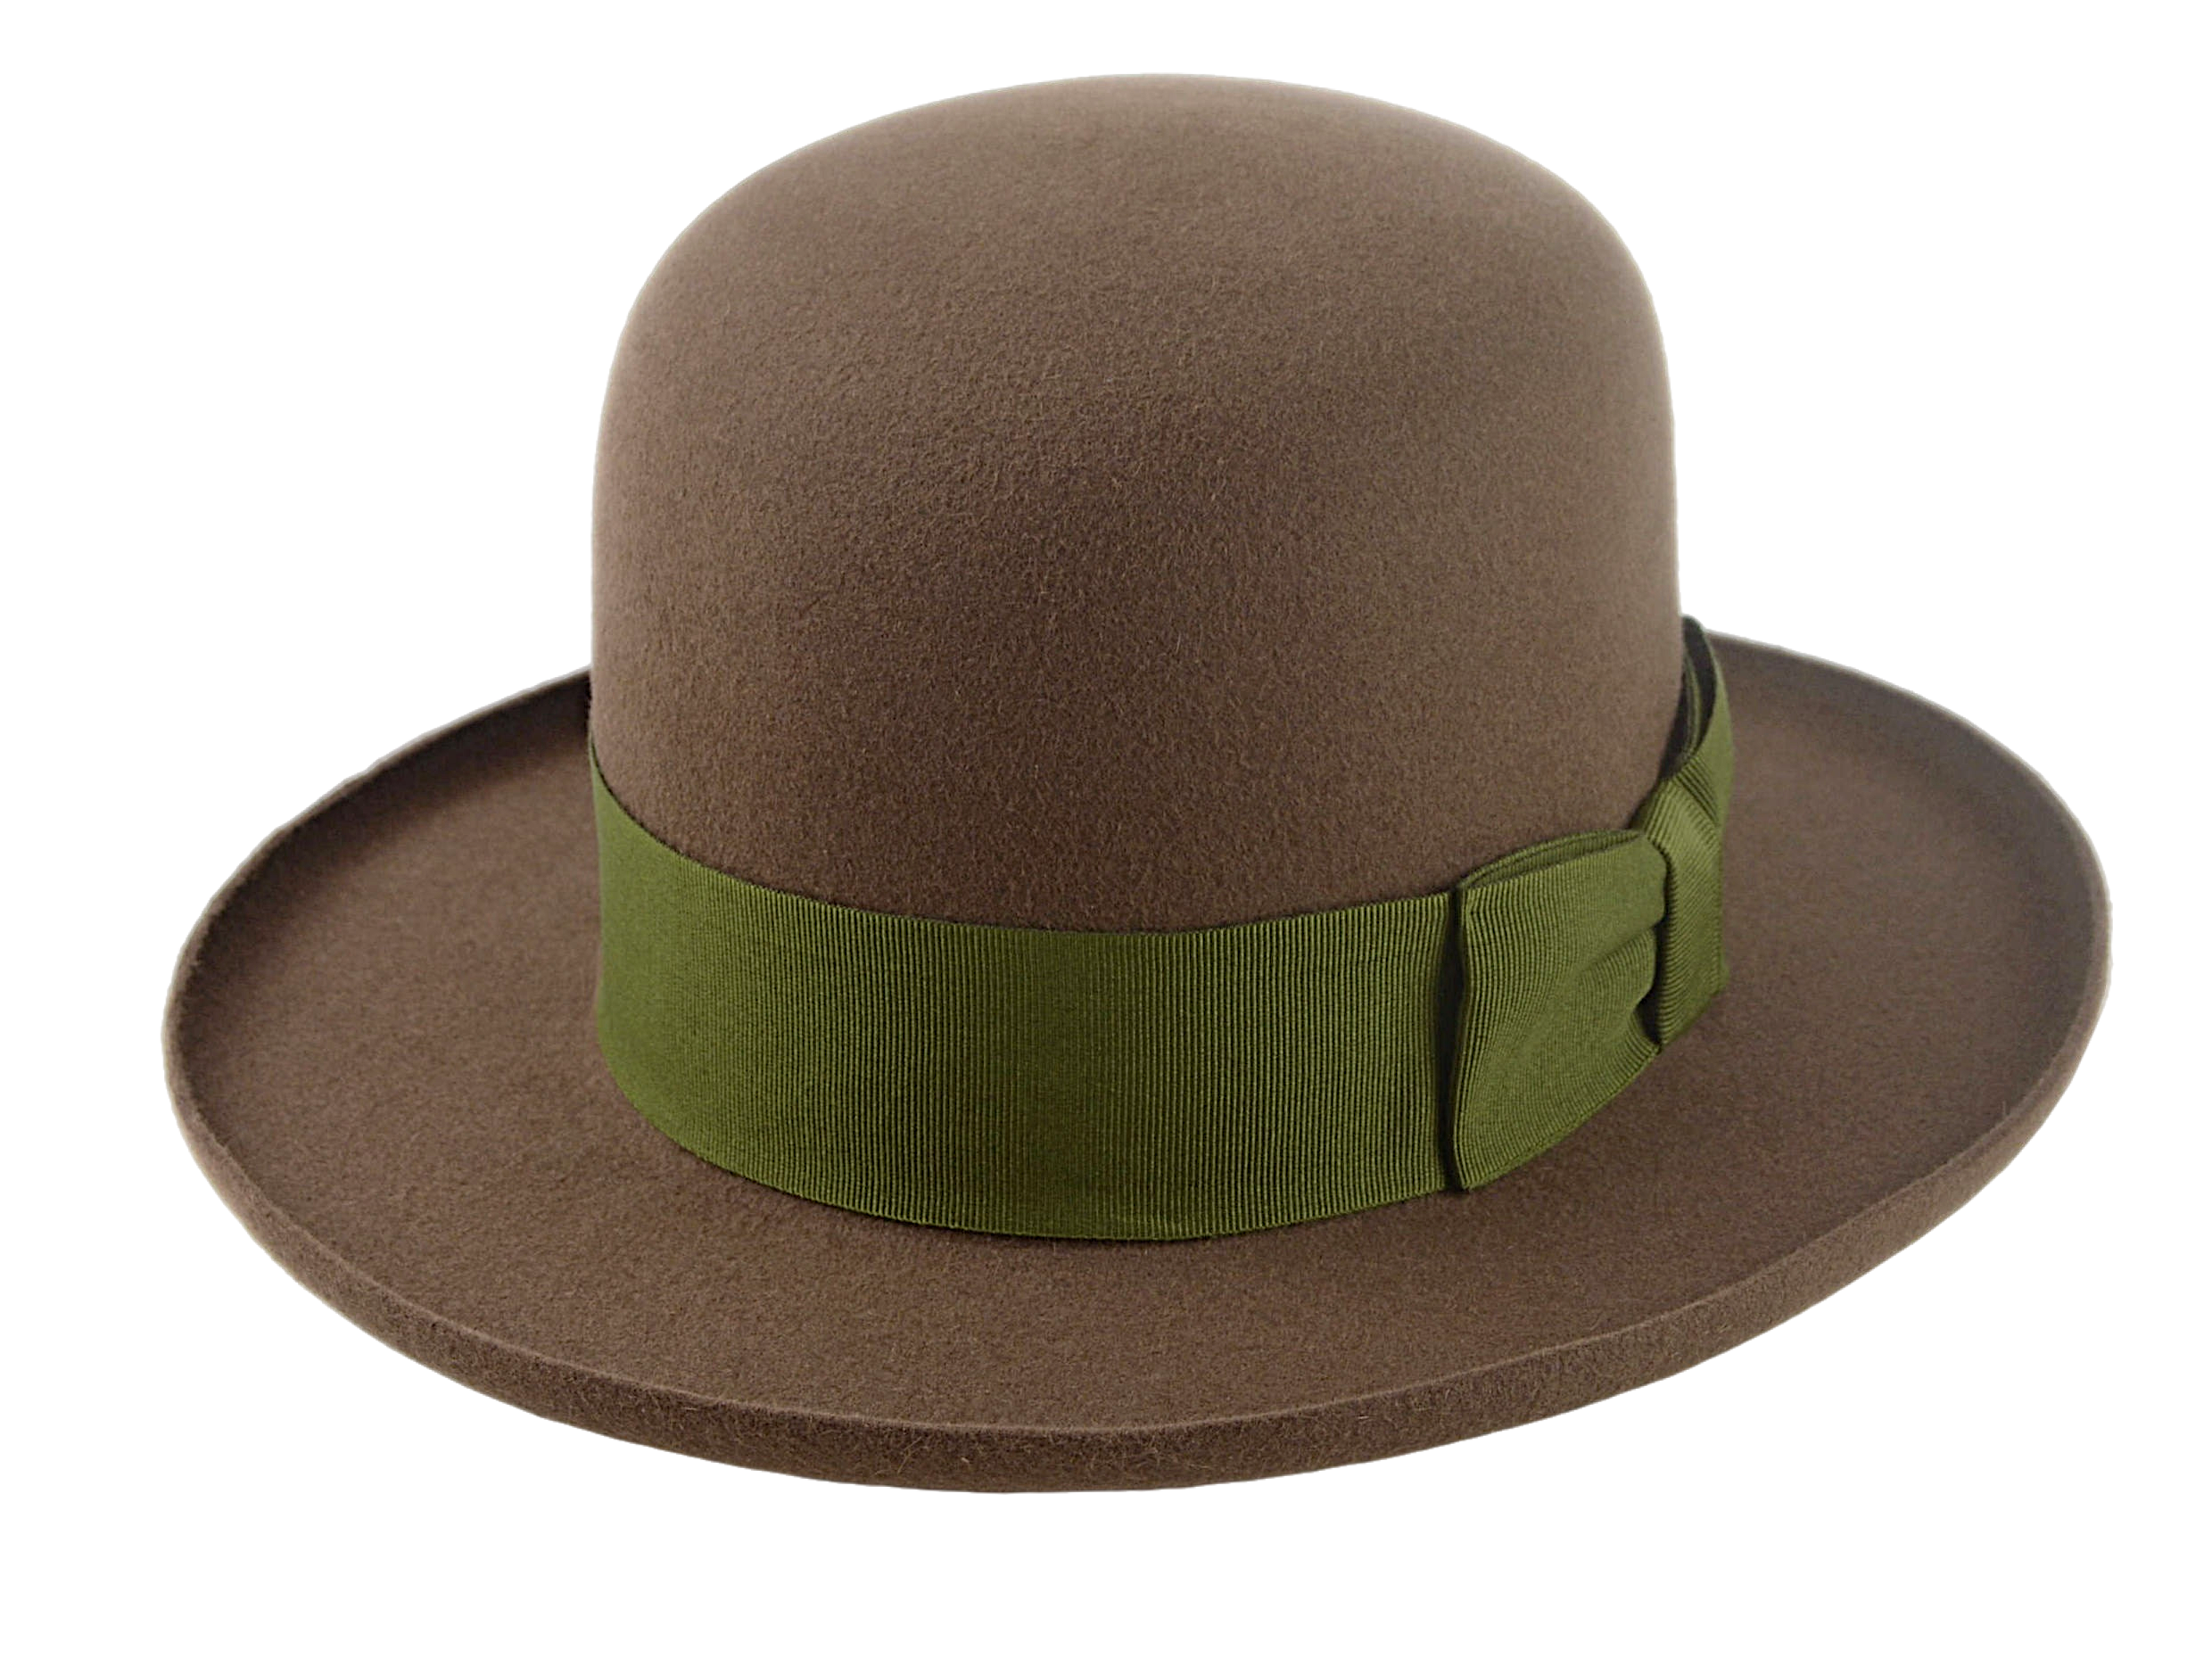 The ROVER | Agnoulita Custom Handmade Hats Agnoulita Hats 1 | Dark Taupe, Men's Fedora, Open Crown, Rabbit fur felt